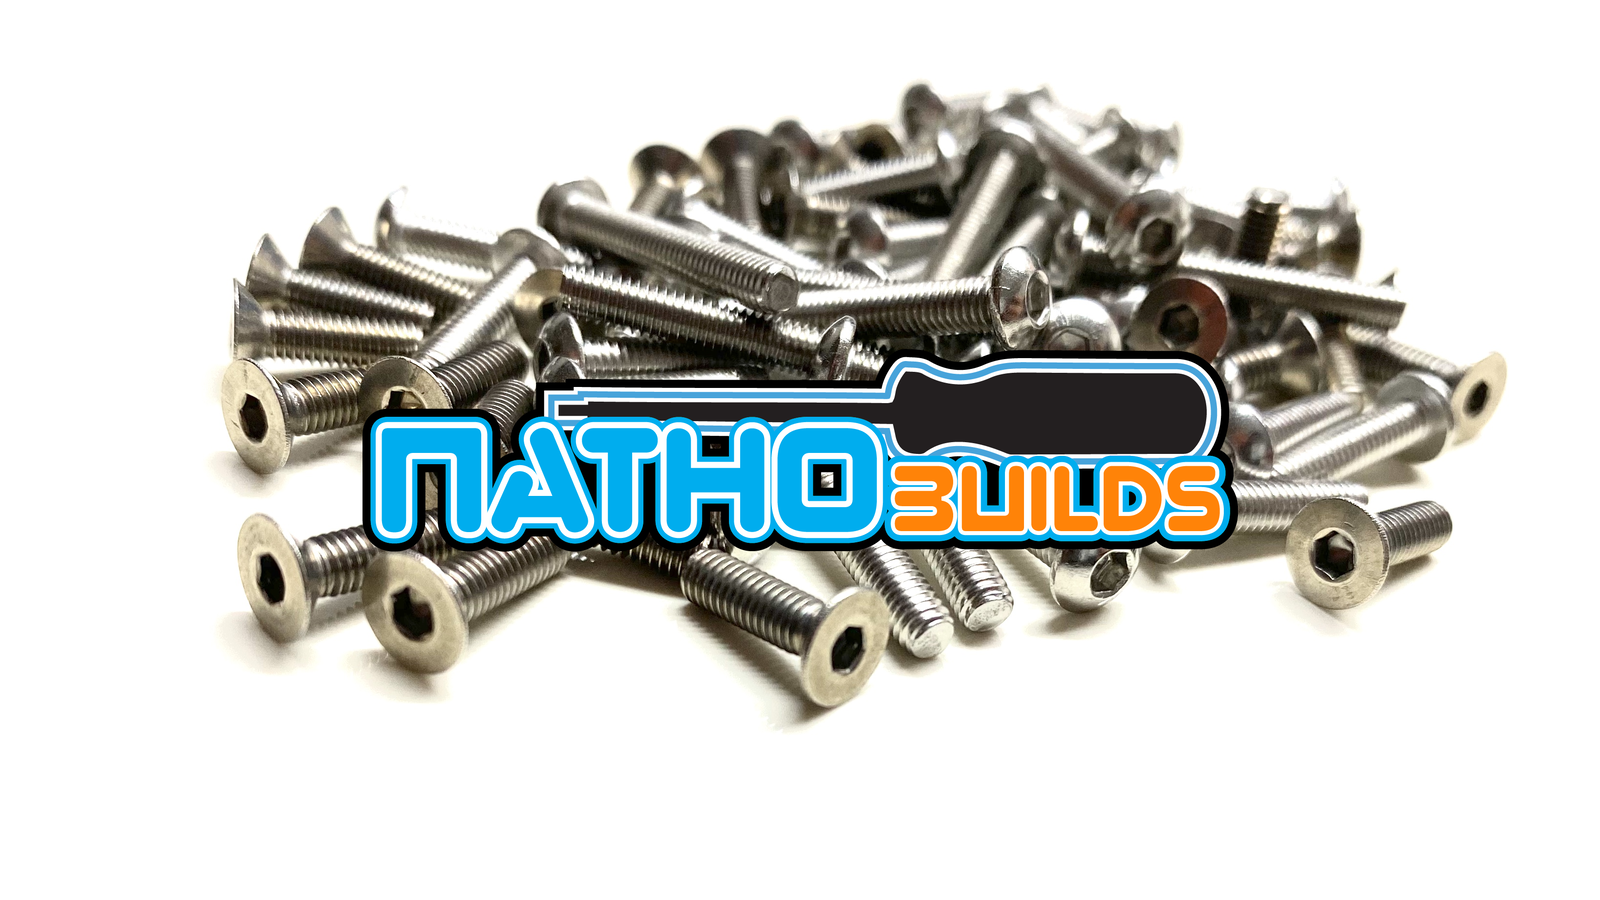 NathoBuilds: Stainless Steel Screw Kits for 1/8th - Team Associated RC8B3.1e